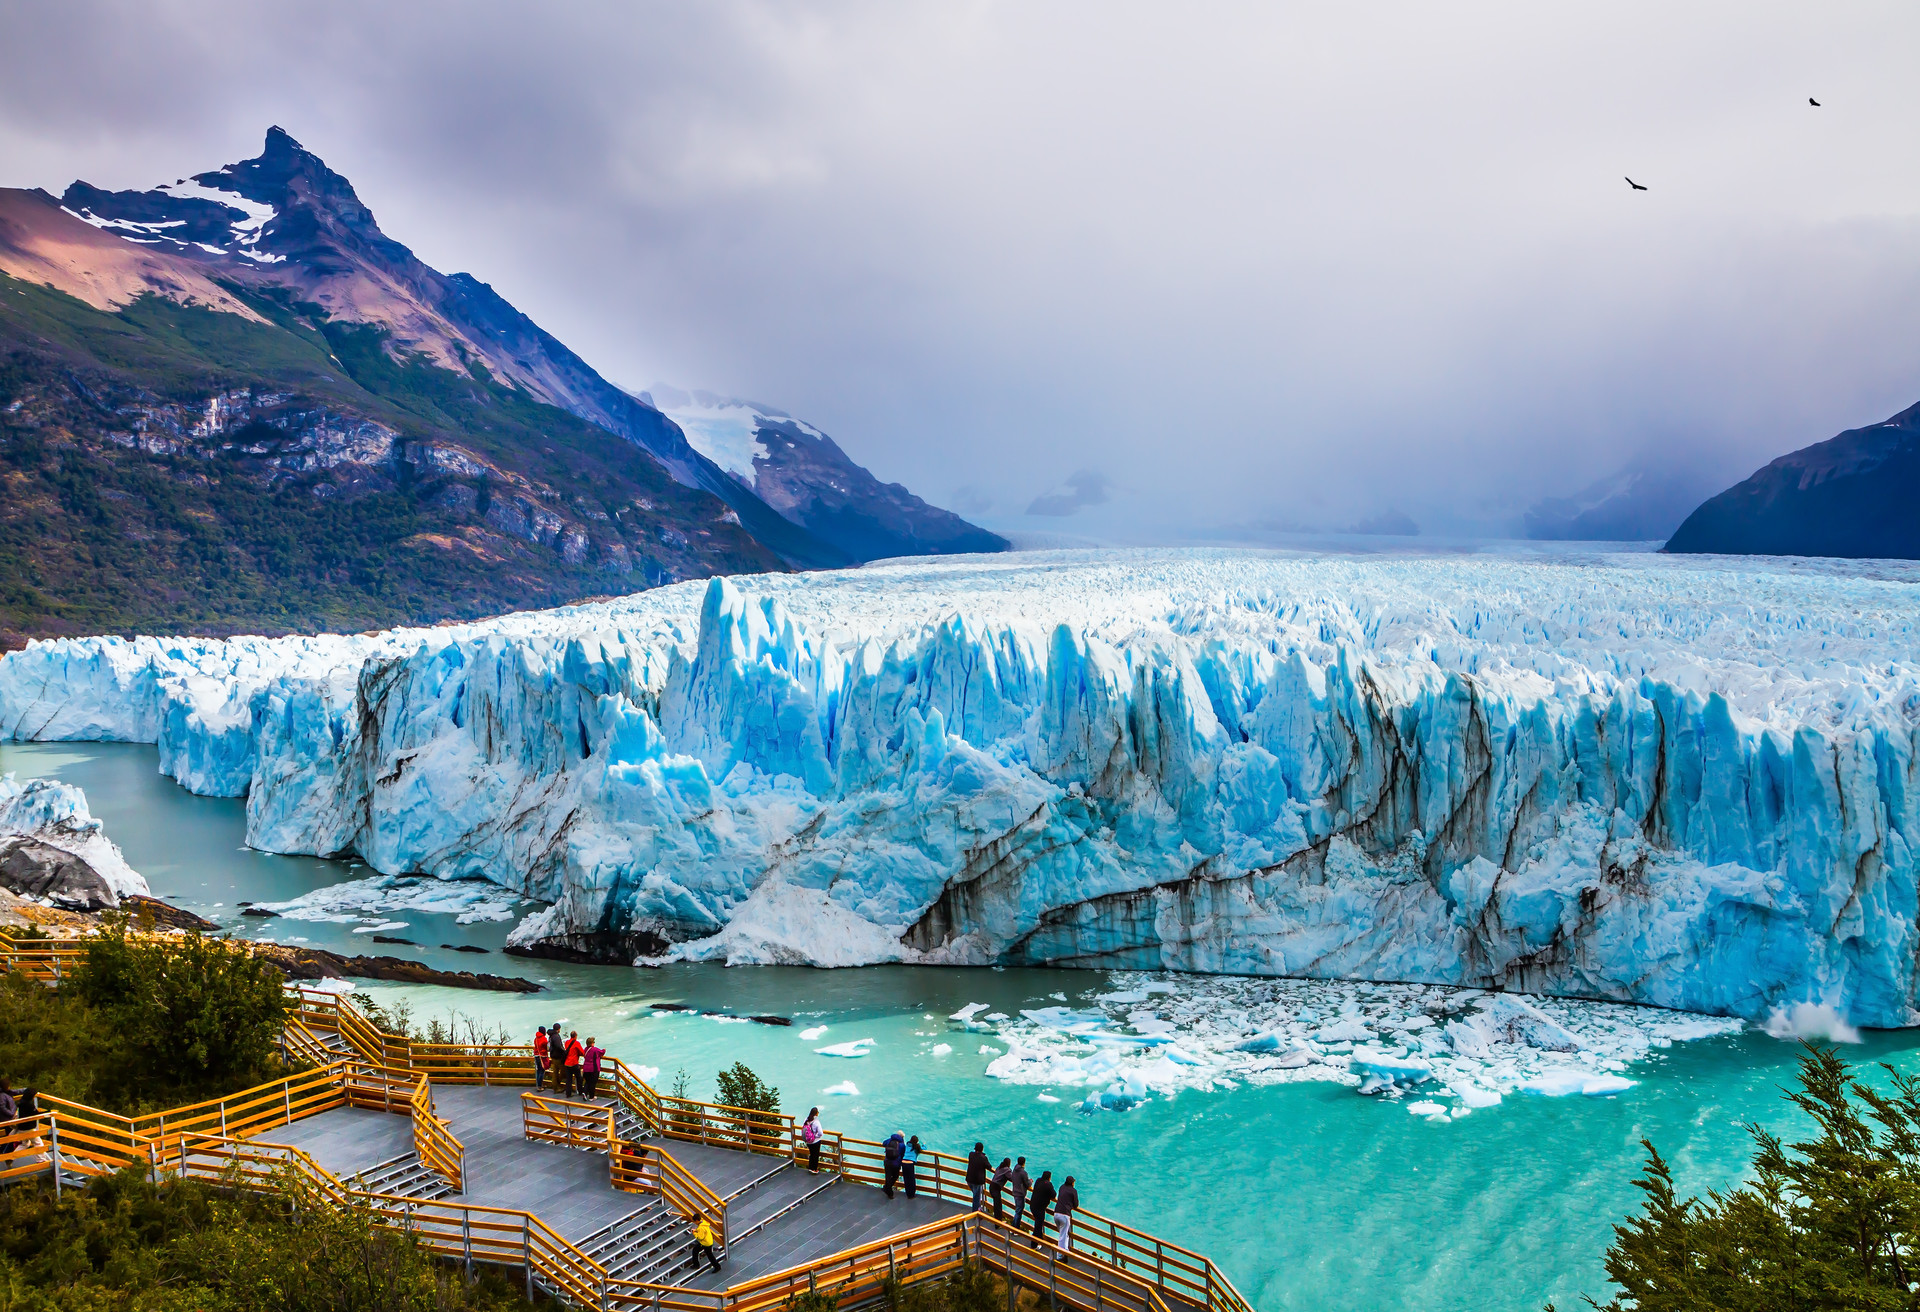 Perito Moreno w Patagonii to niesamowite miejsce kontemplacji